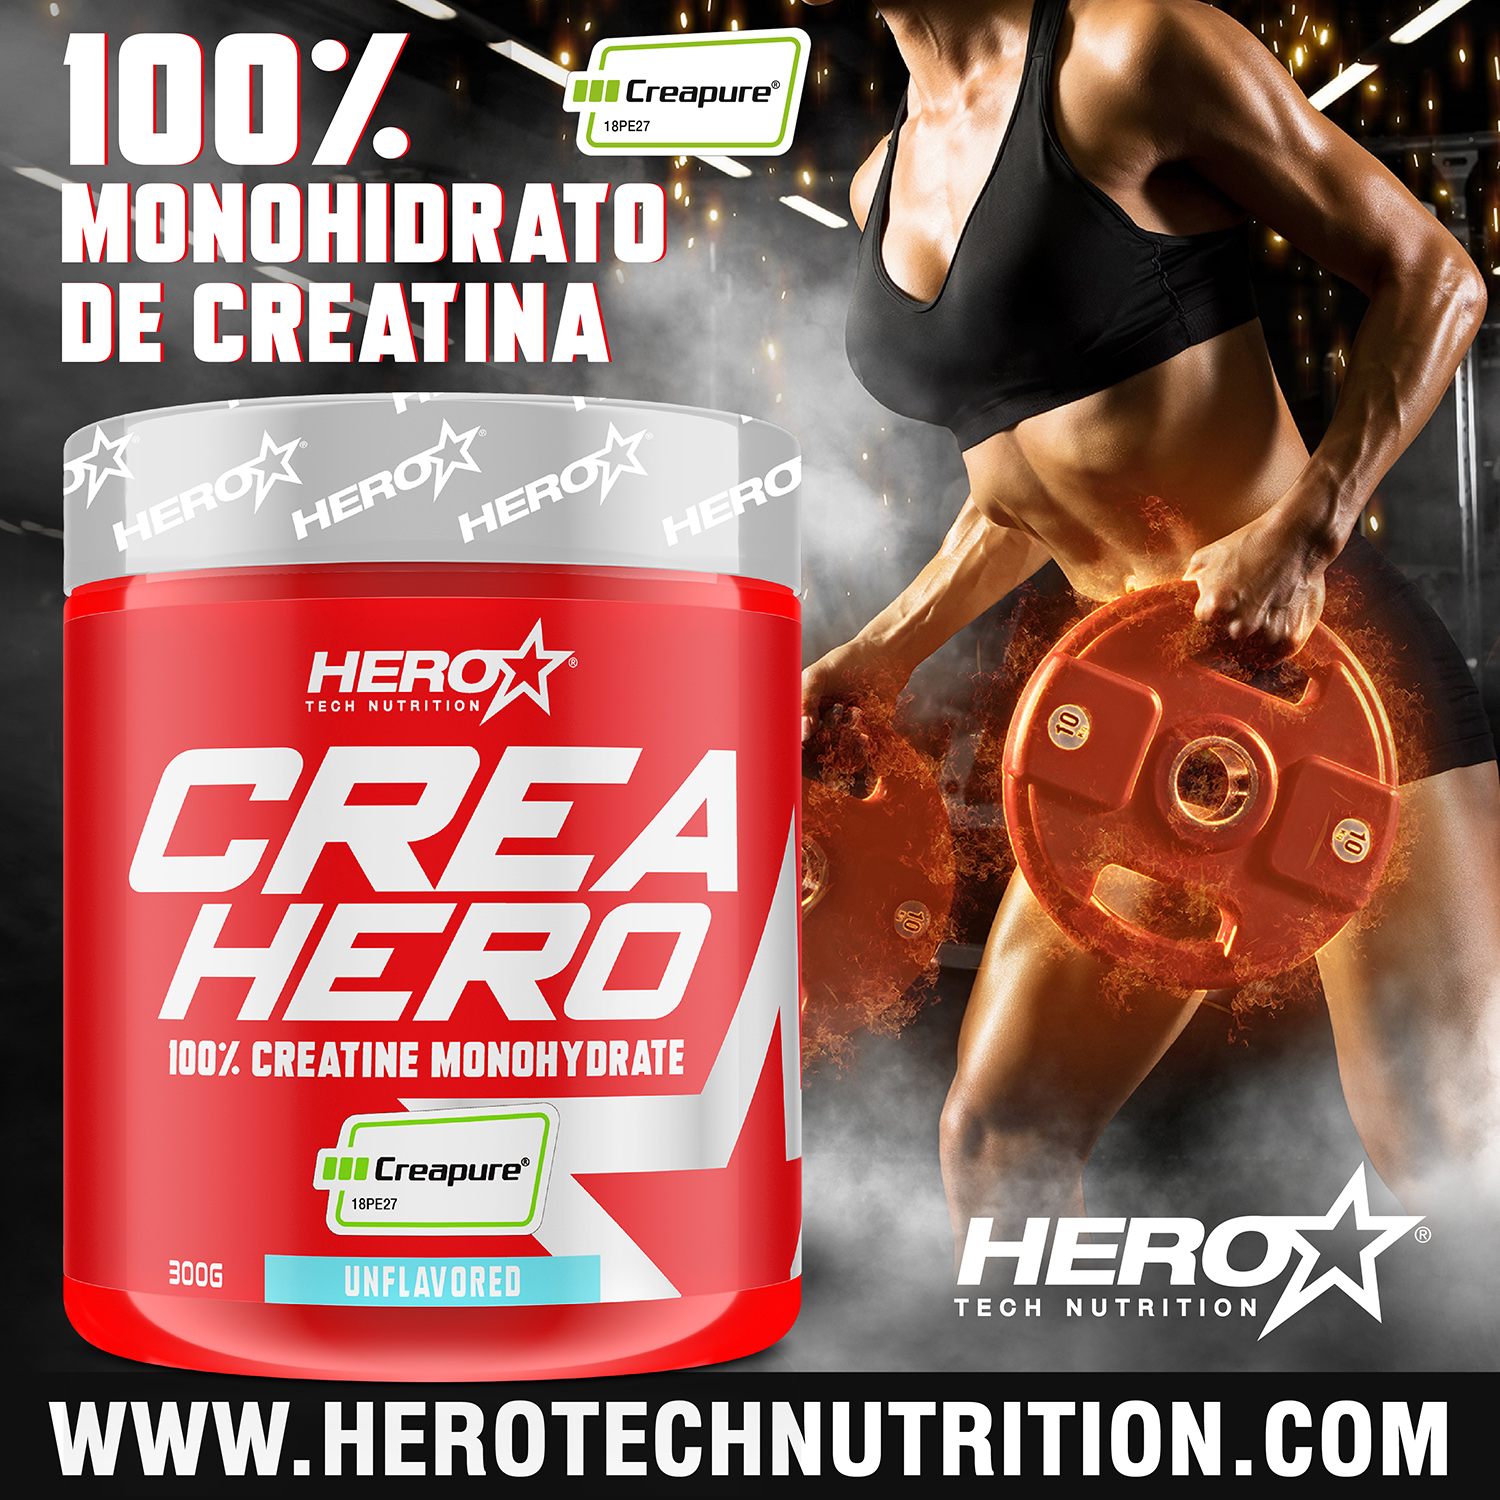 CREAHERO CREATINA CREAPURE - HERO TECH NUTRITION herotechnutrition